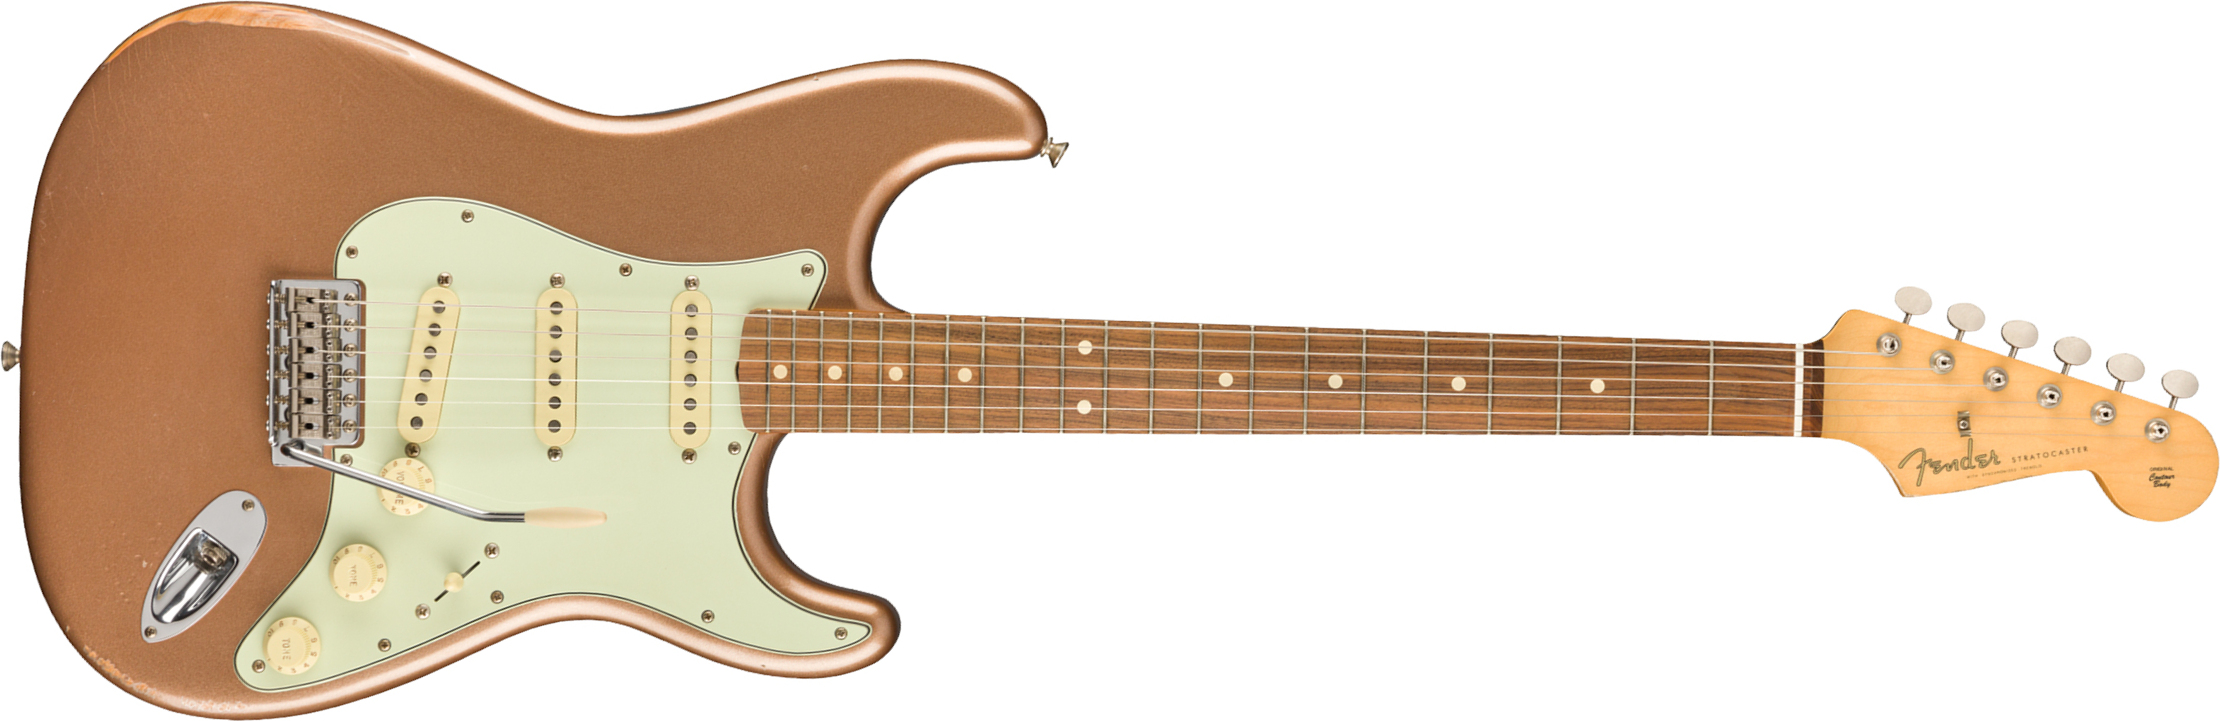 Fender Strat 60s Road Worn Mex Pf - Firemist Gold - E-Gitarre in Str-Form - Main picture